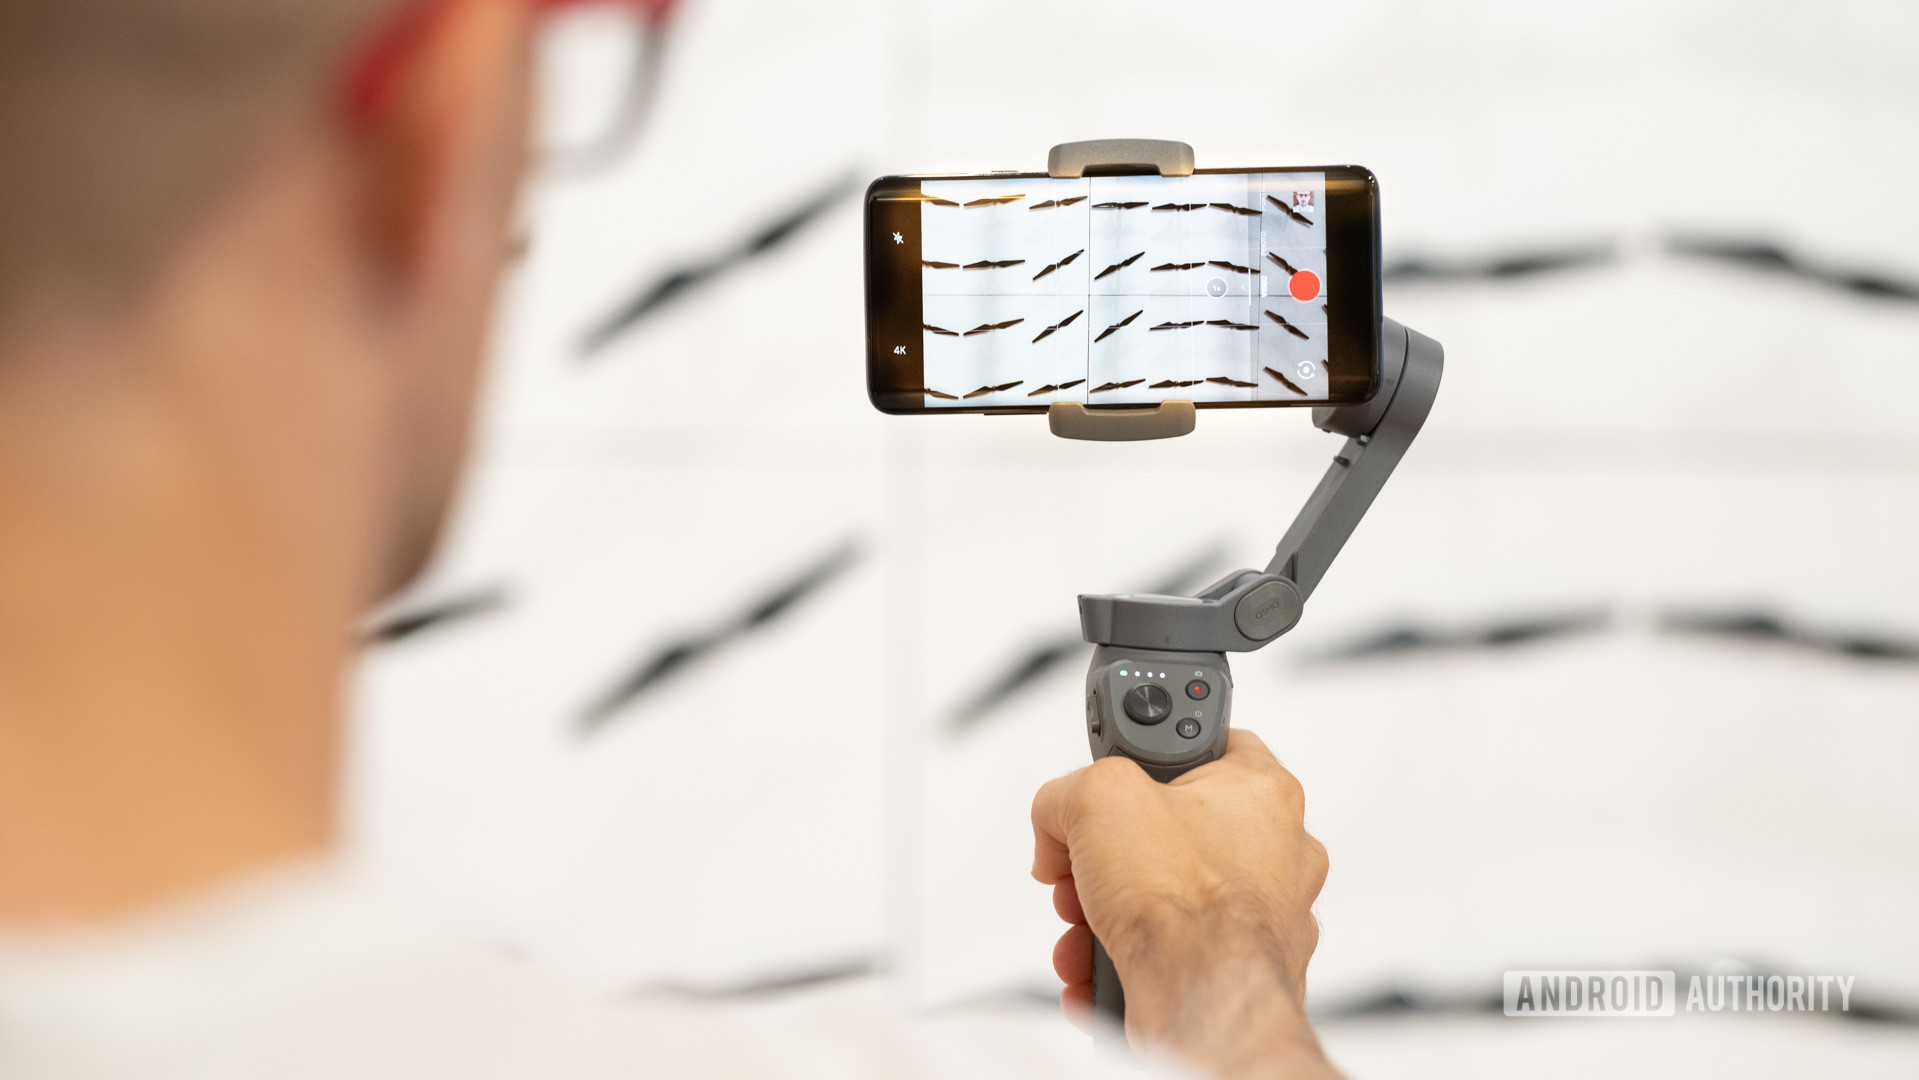 48” Monopod and Pistol Grip Tabletop Tripod DJI Osmo Mobile 3 Smartphone Gimbal with 36 LED Video Light